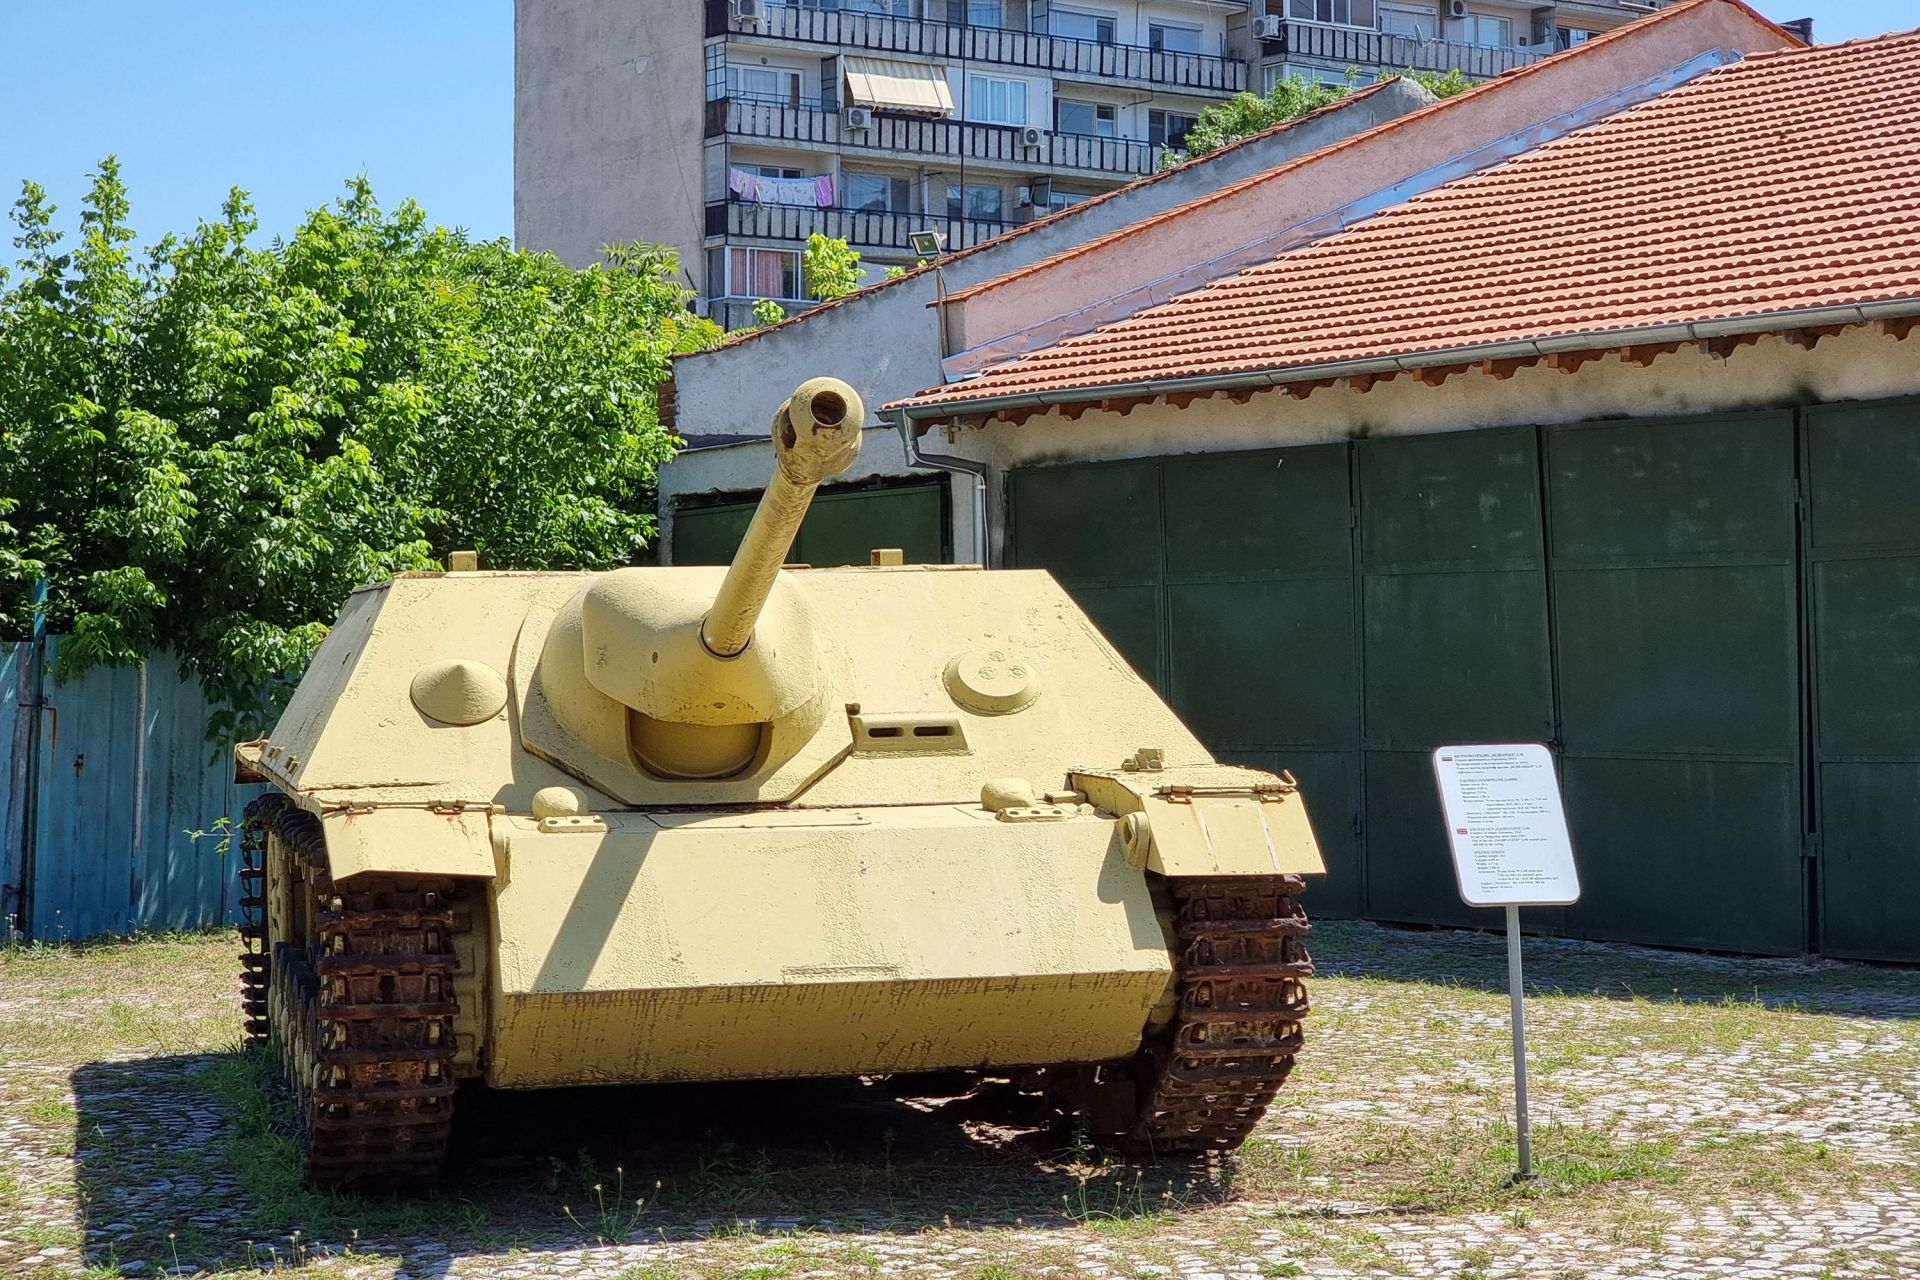 Щурмово оръдие Ягдпанцер /Jagdpanzer L48/